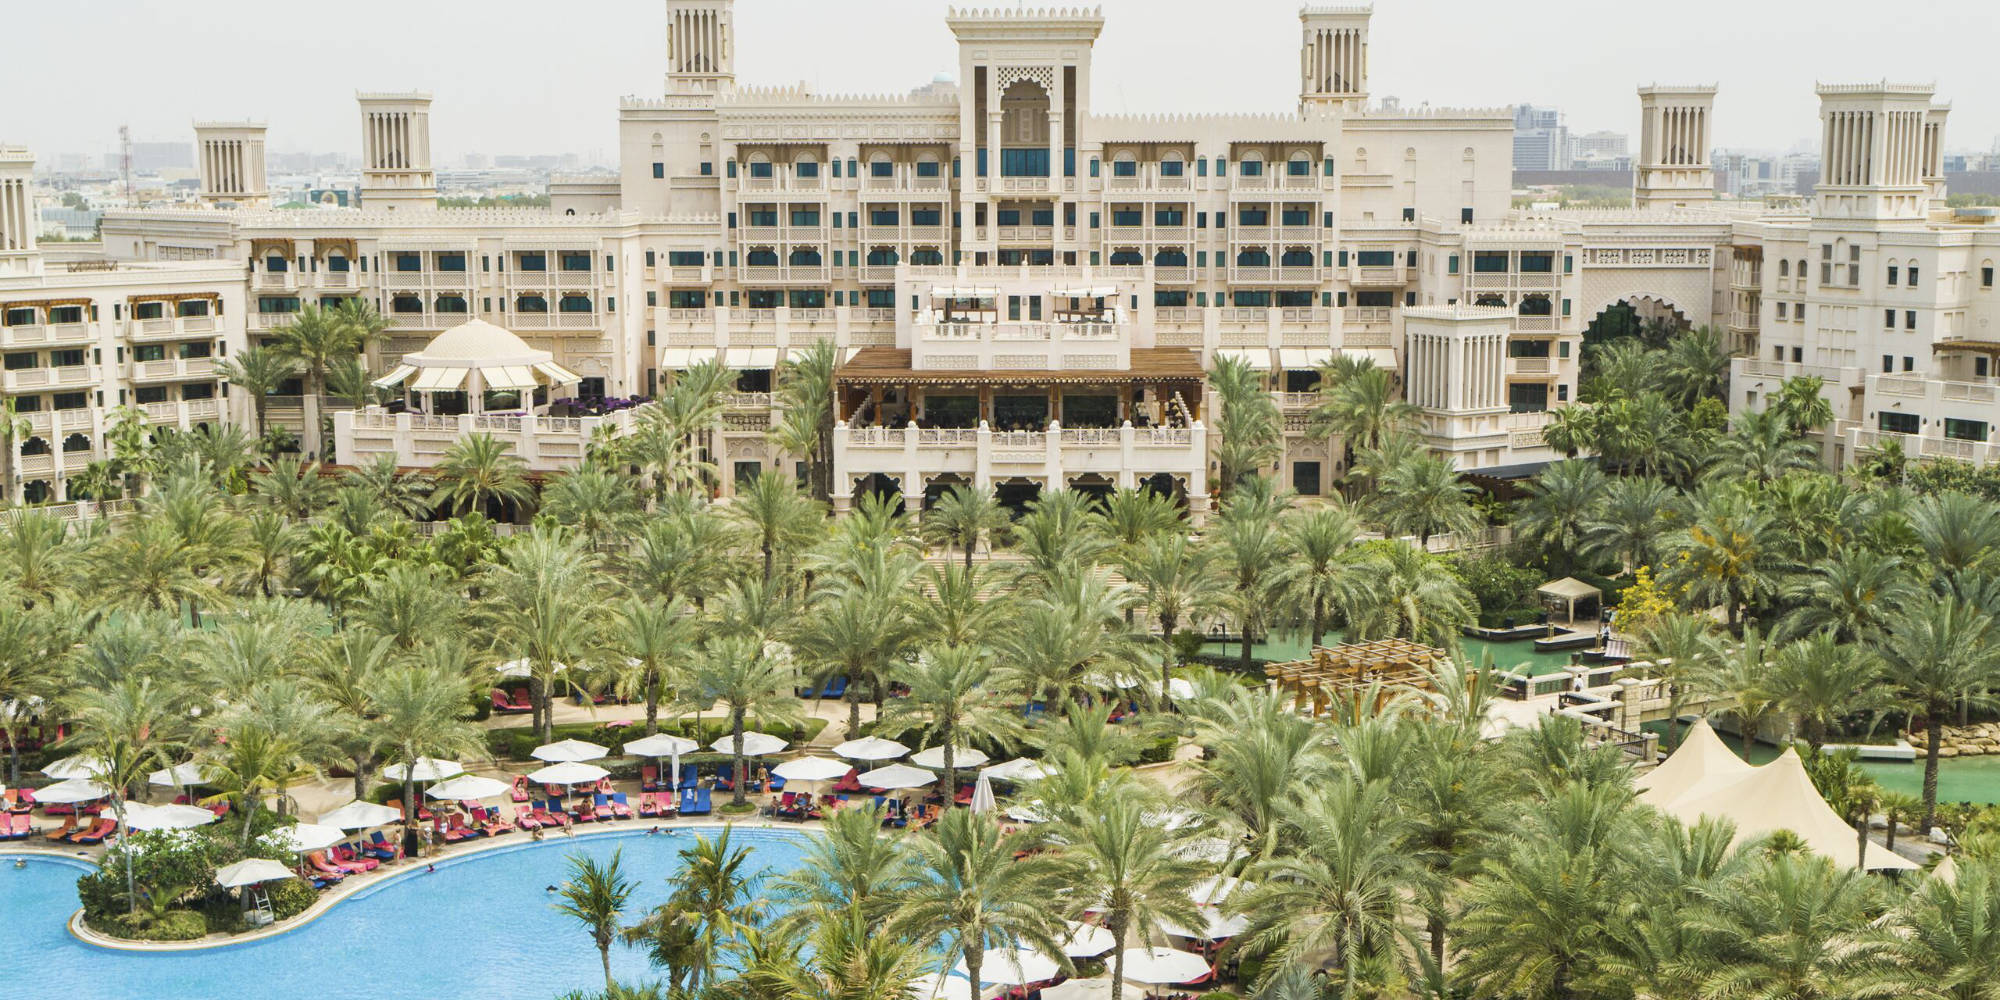 The Jumeirah Al Qasr Resort in Dubai